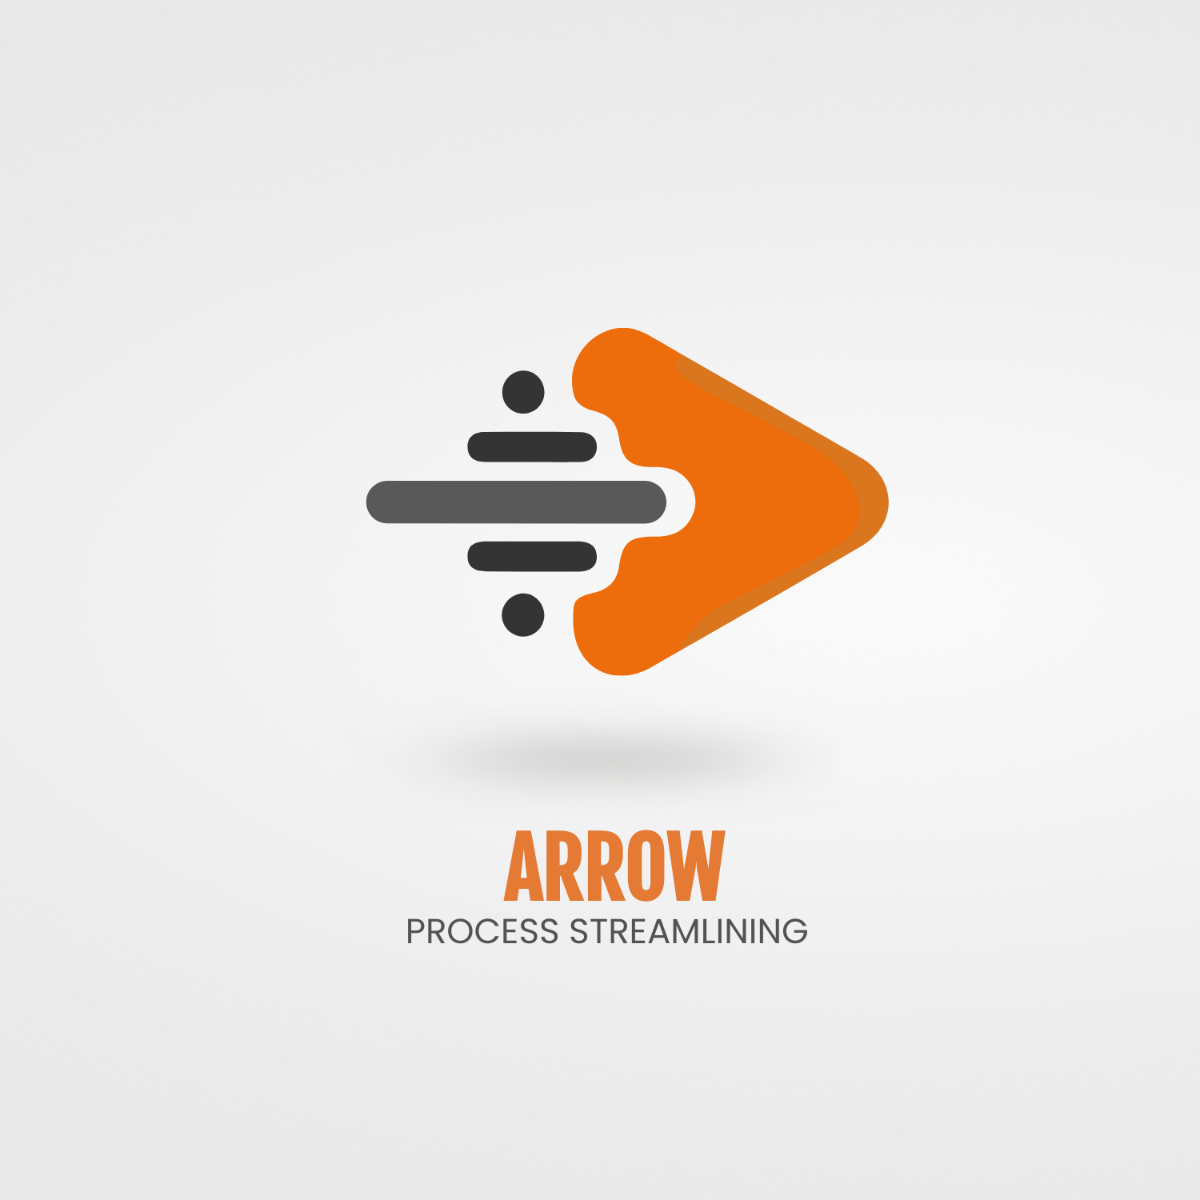 Free Process Streamlining Arrow Logo Template